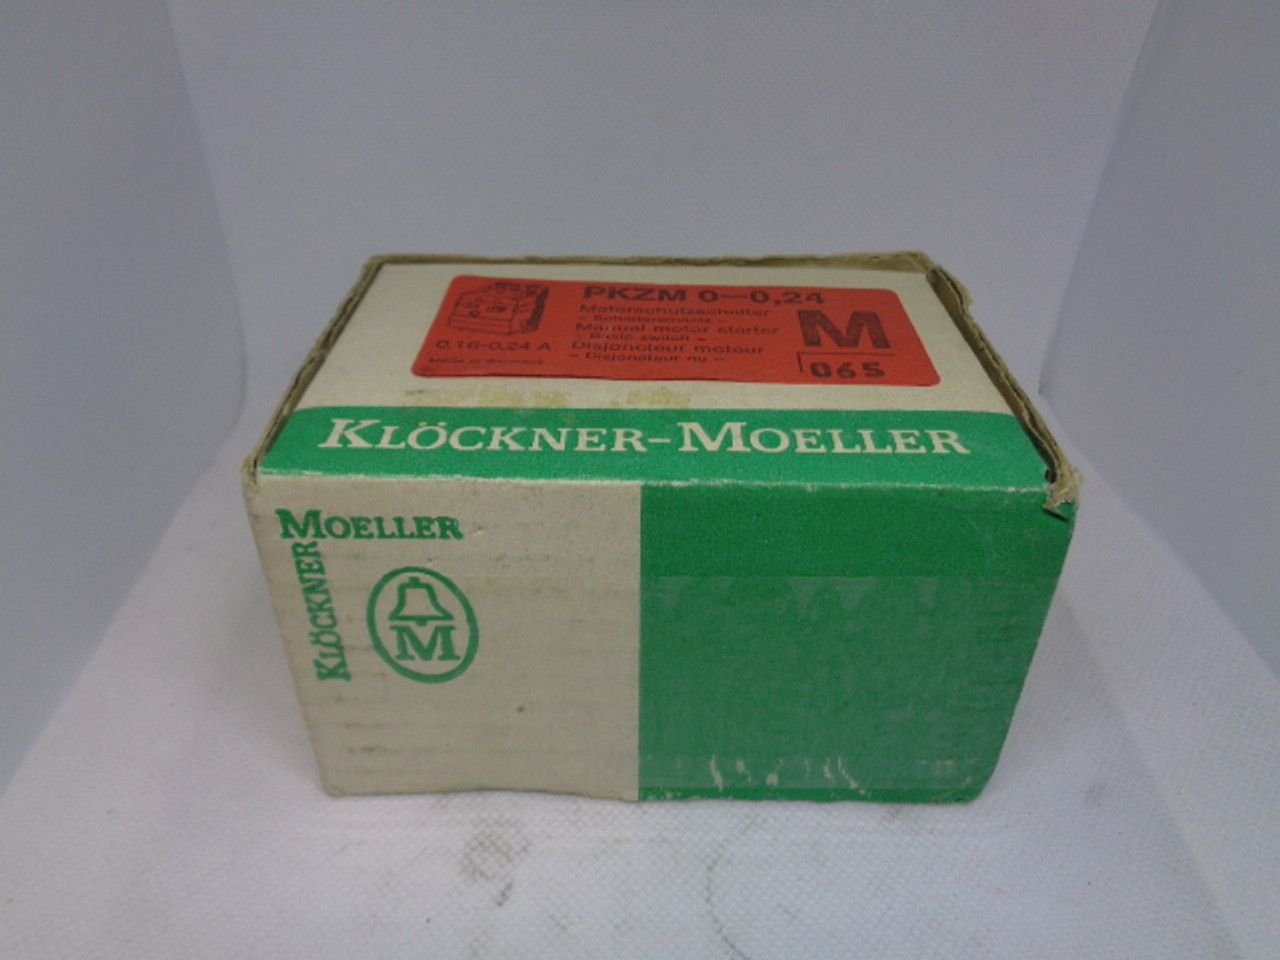 Klockner Moeller PKZM 0-0,24 Manual Motor Starter (Box of 1) 0,16-0,24A